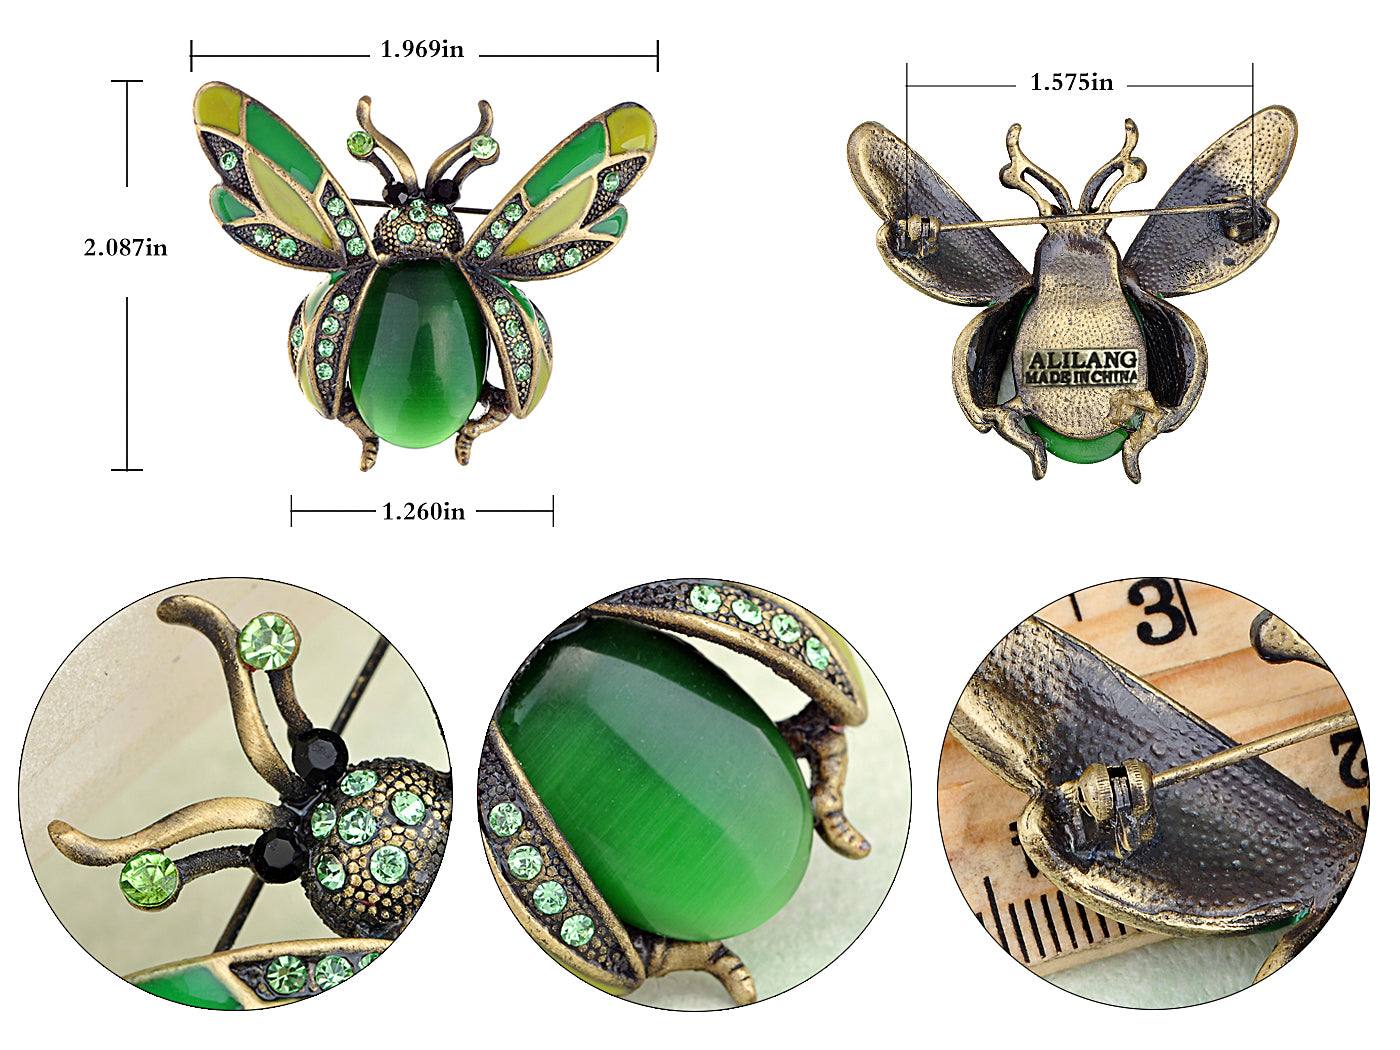 Peridot Green Ladybug Fly Insect Jewelry Brooch Pin